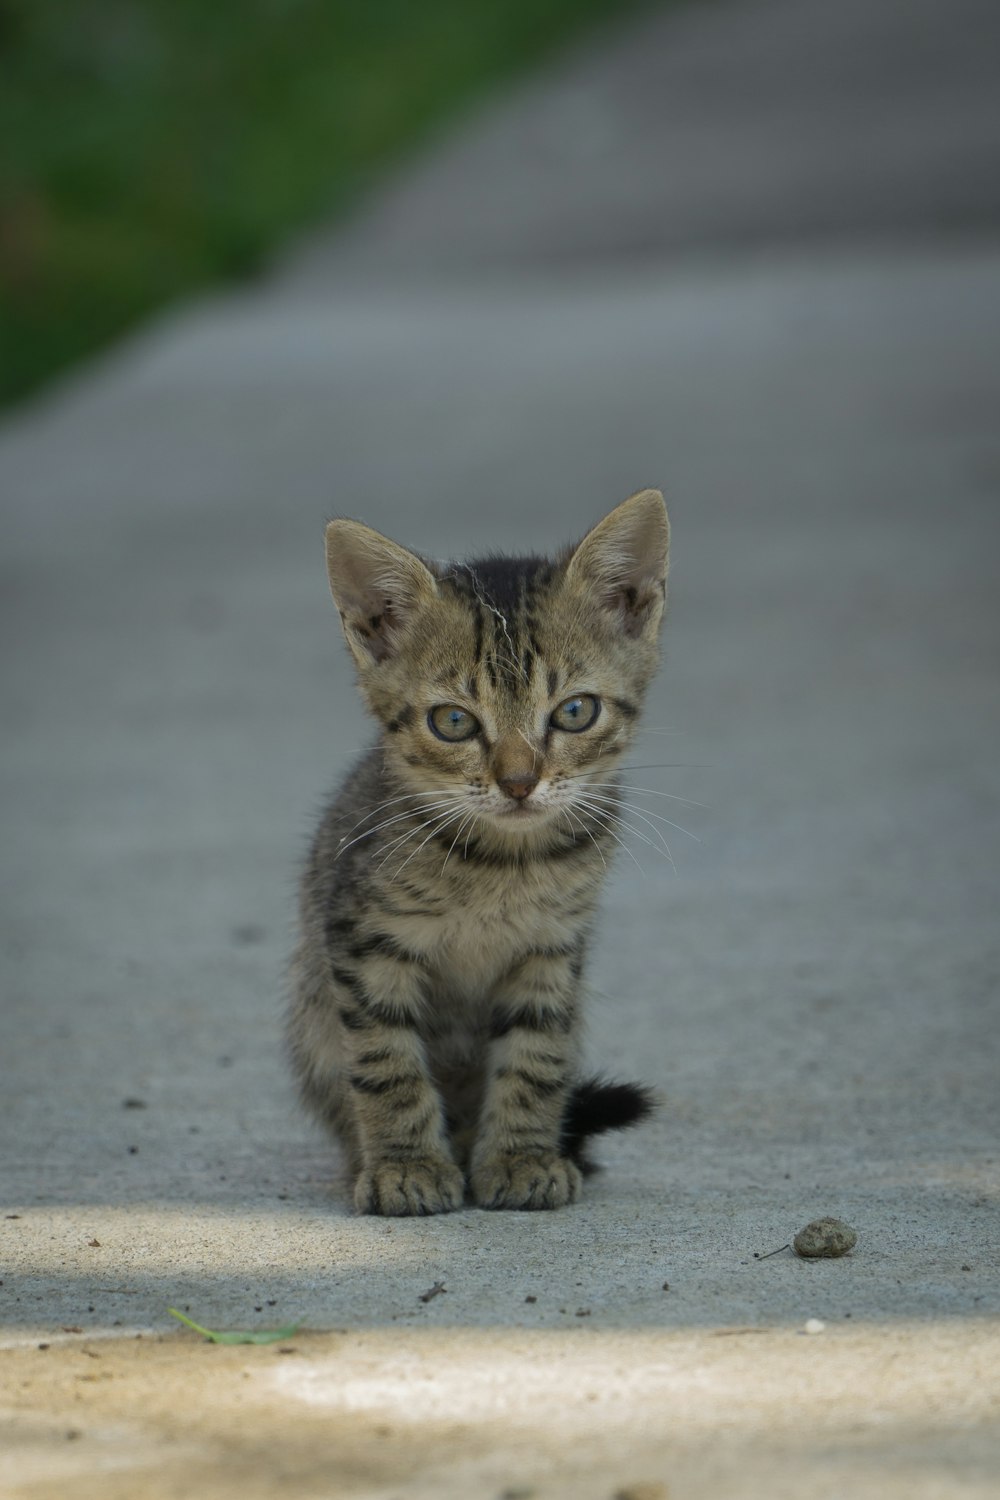 a kitten walking on a concrete surface